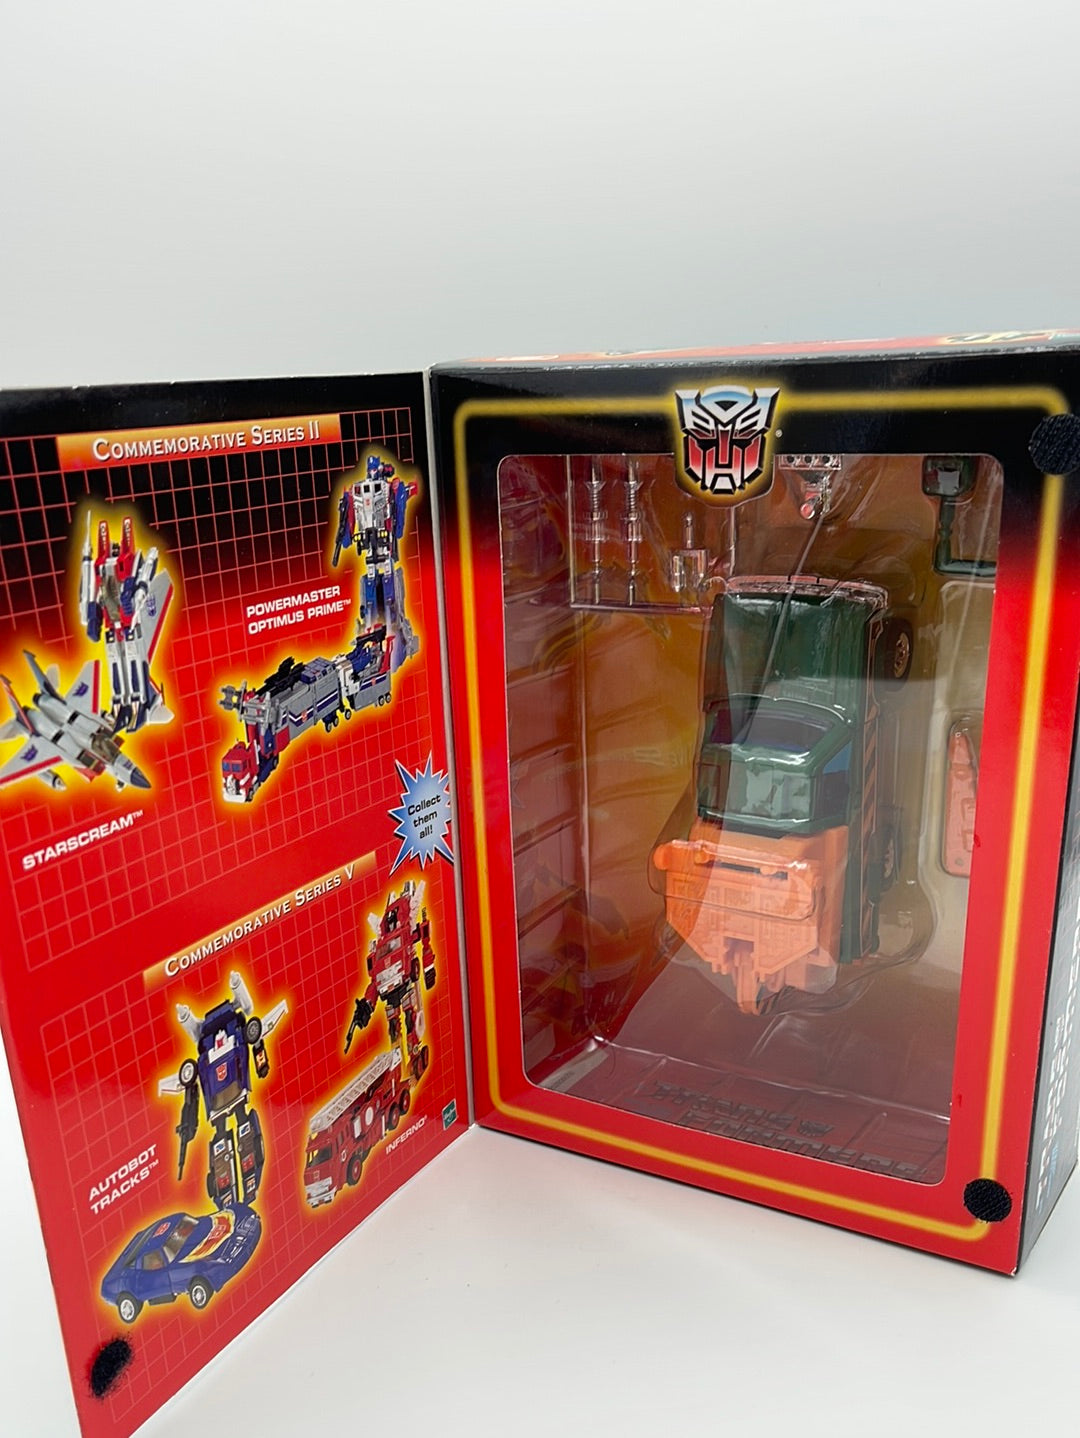 2003 Transformers G1 Hoist Commemorative Series V Hasbro Takara Reissue TRU